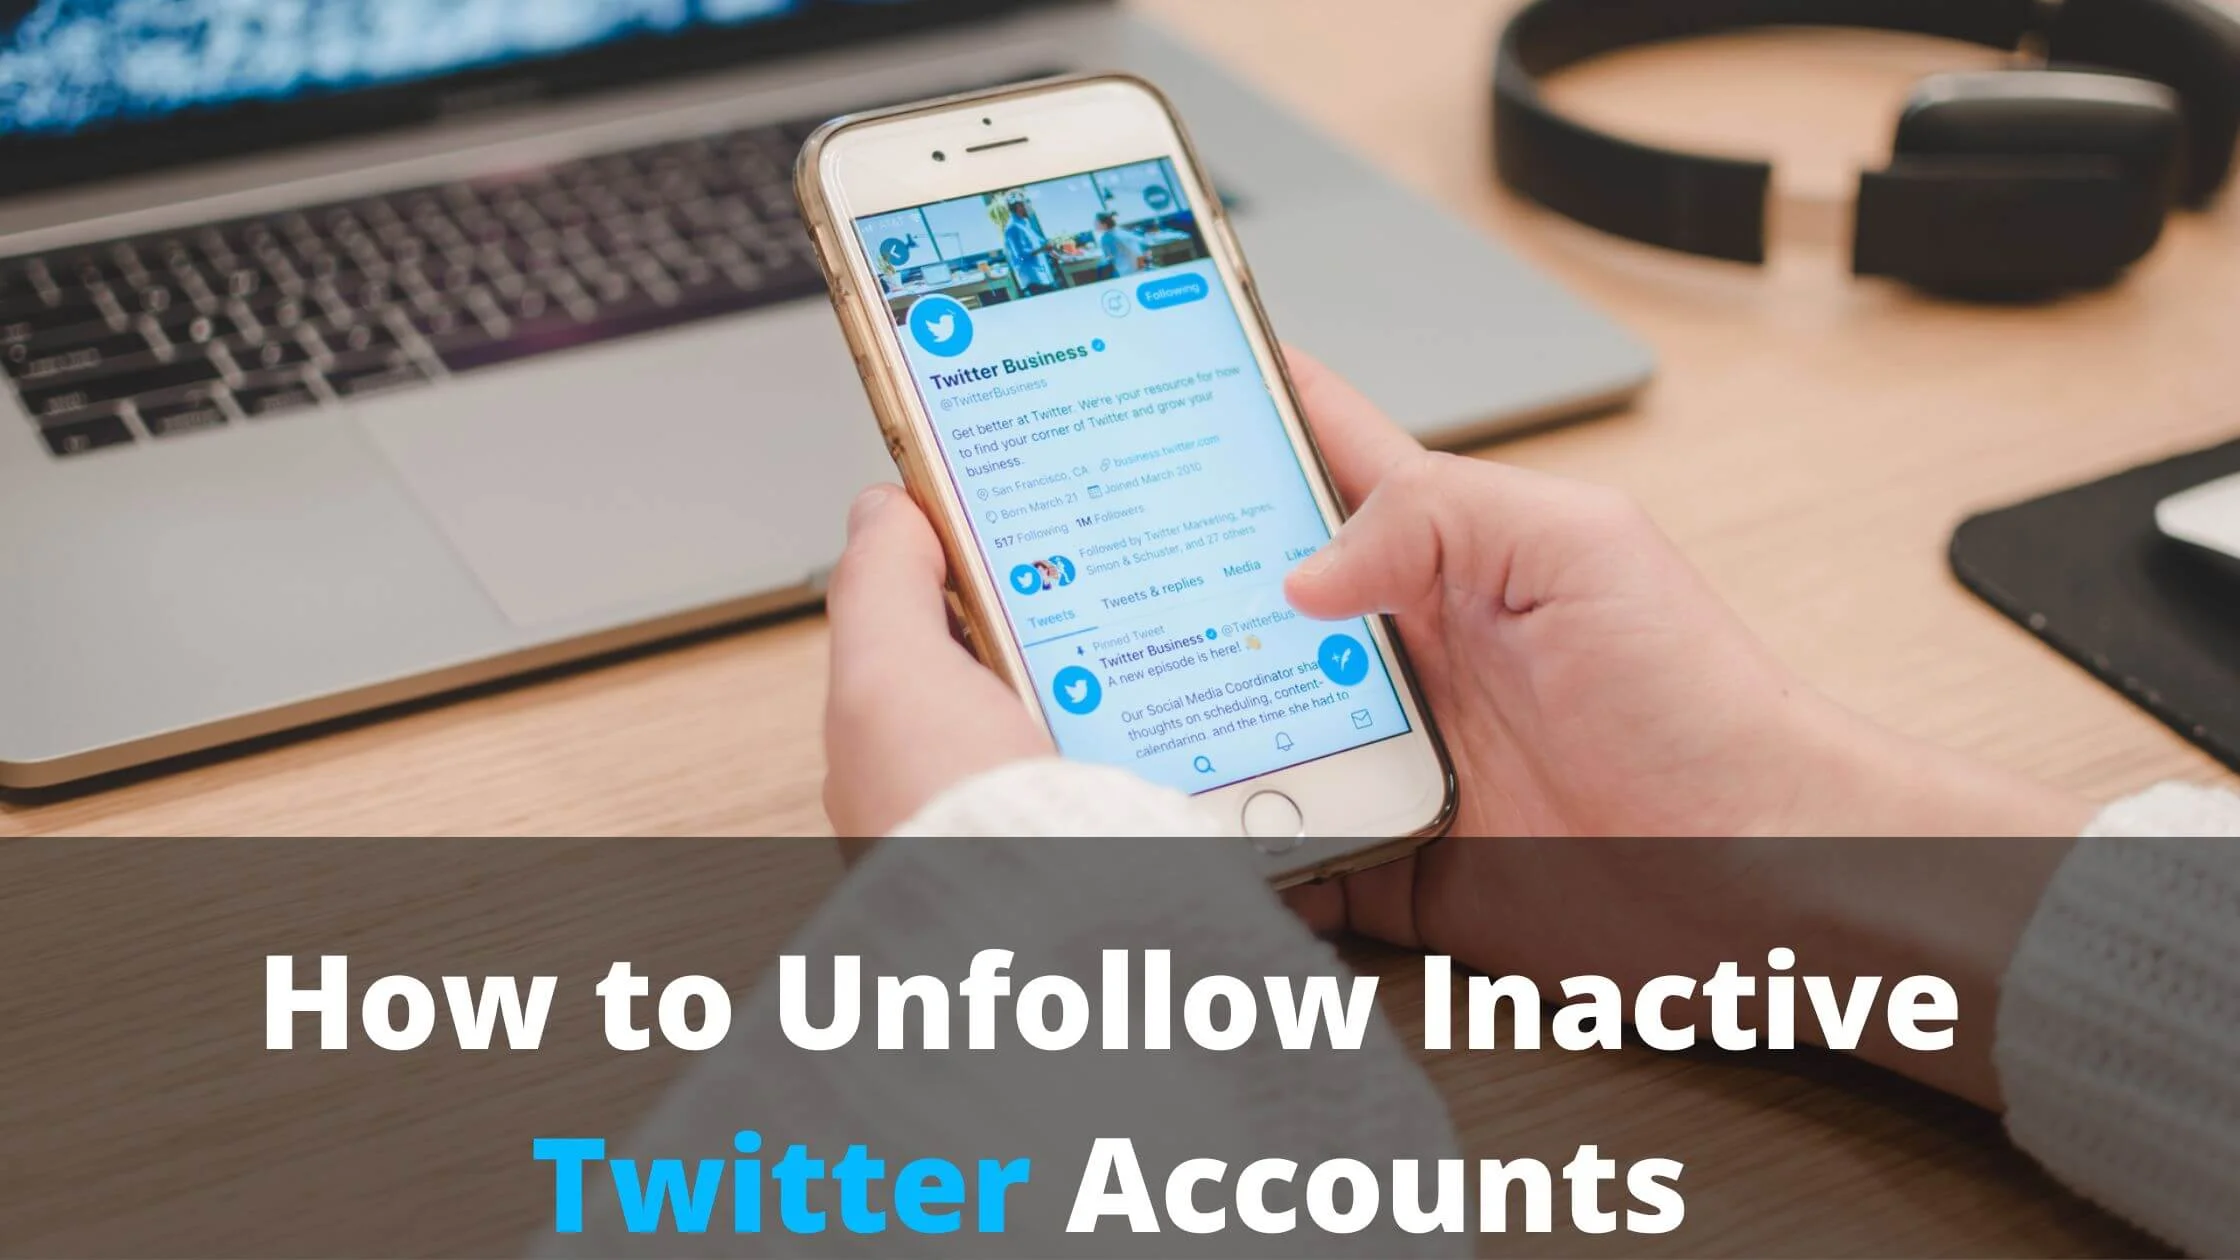 Unfollow Inactive Twitter Accounts